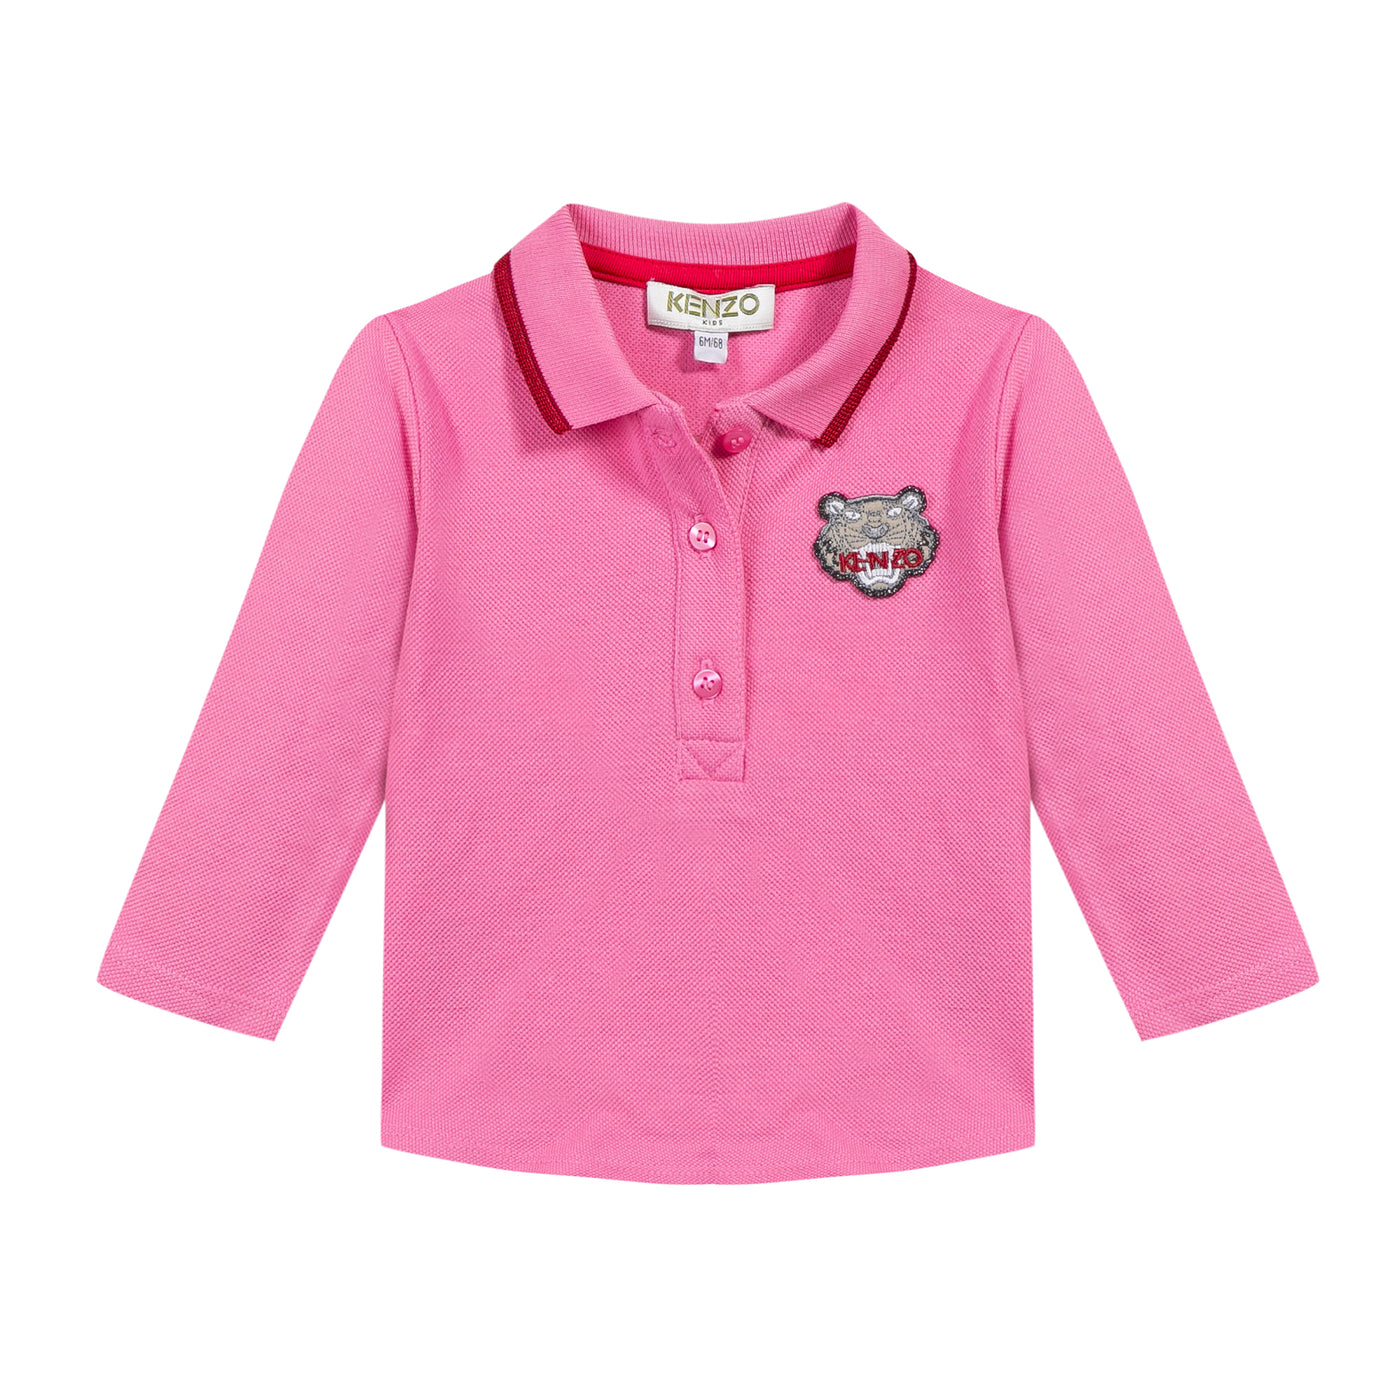 Kenzo Kids Baby Polo Shirt in Pink KK11007 320